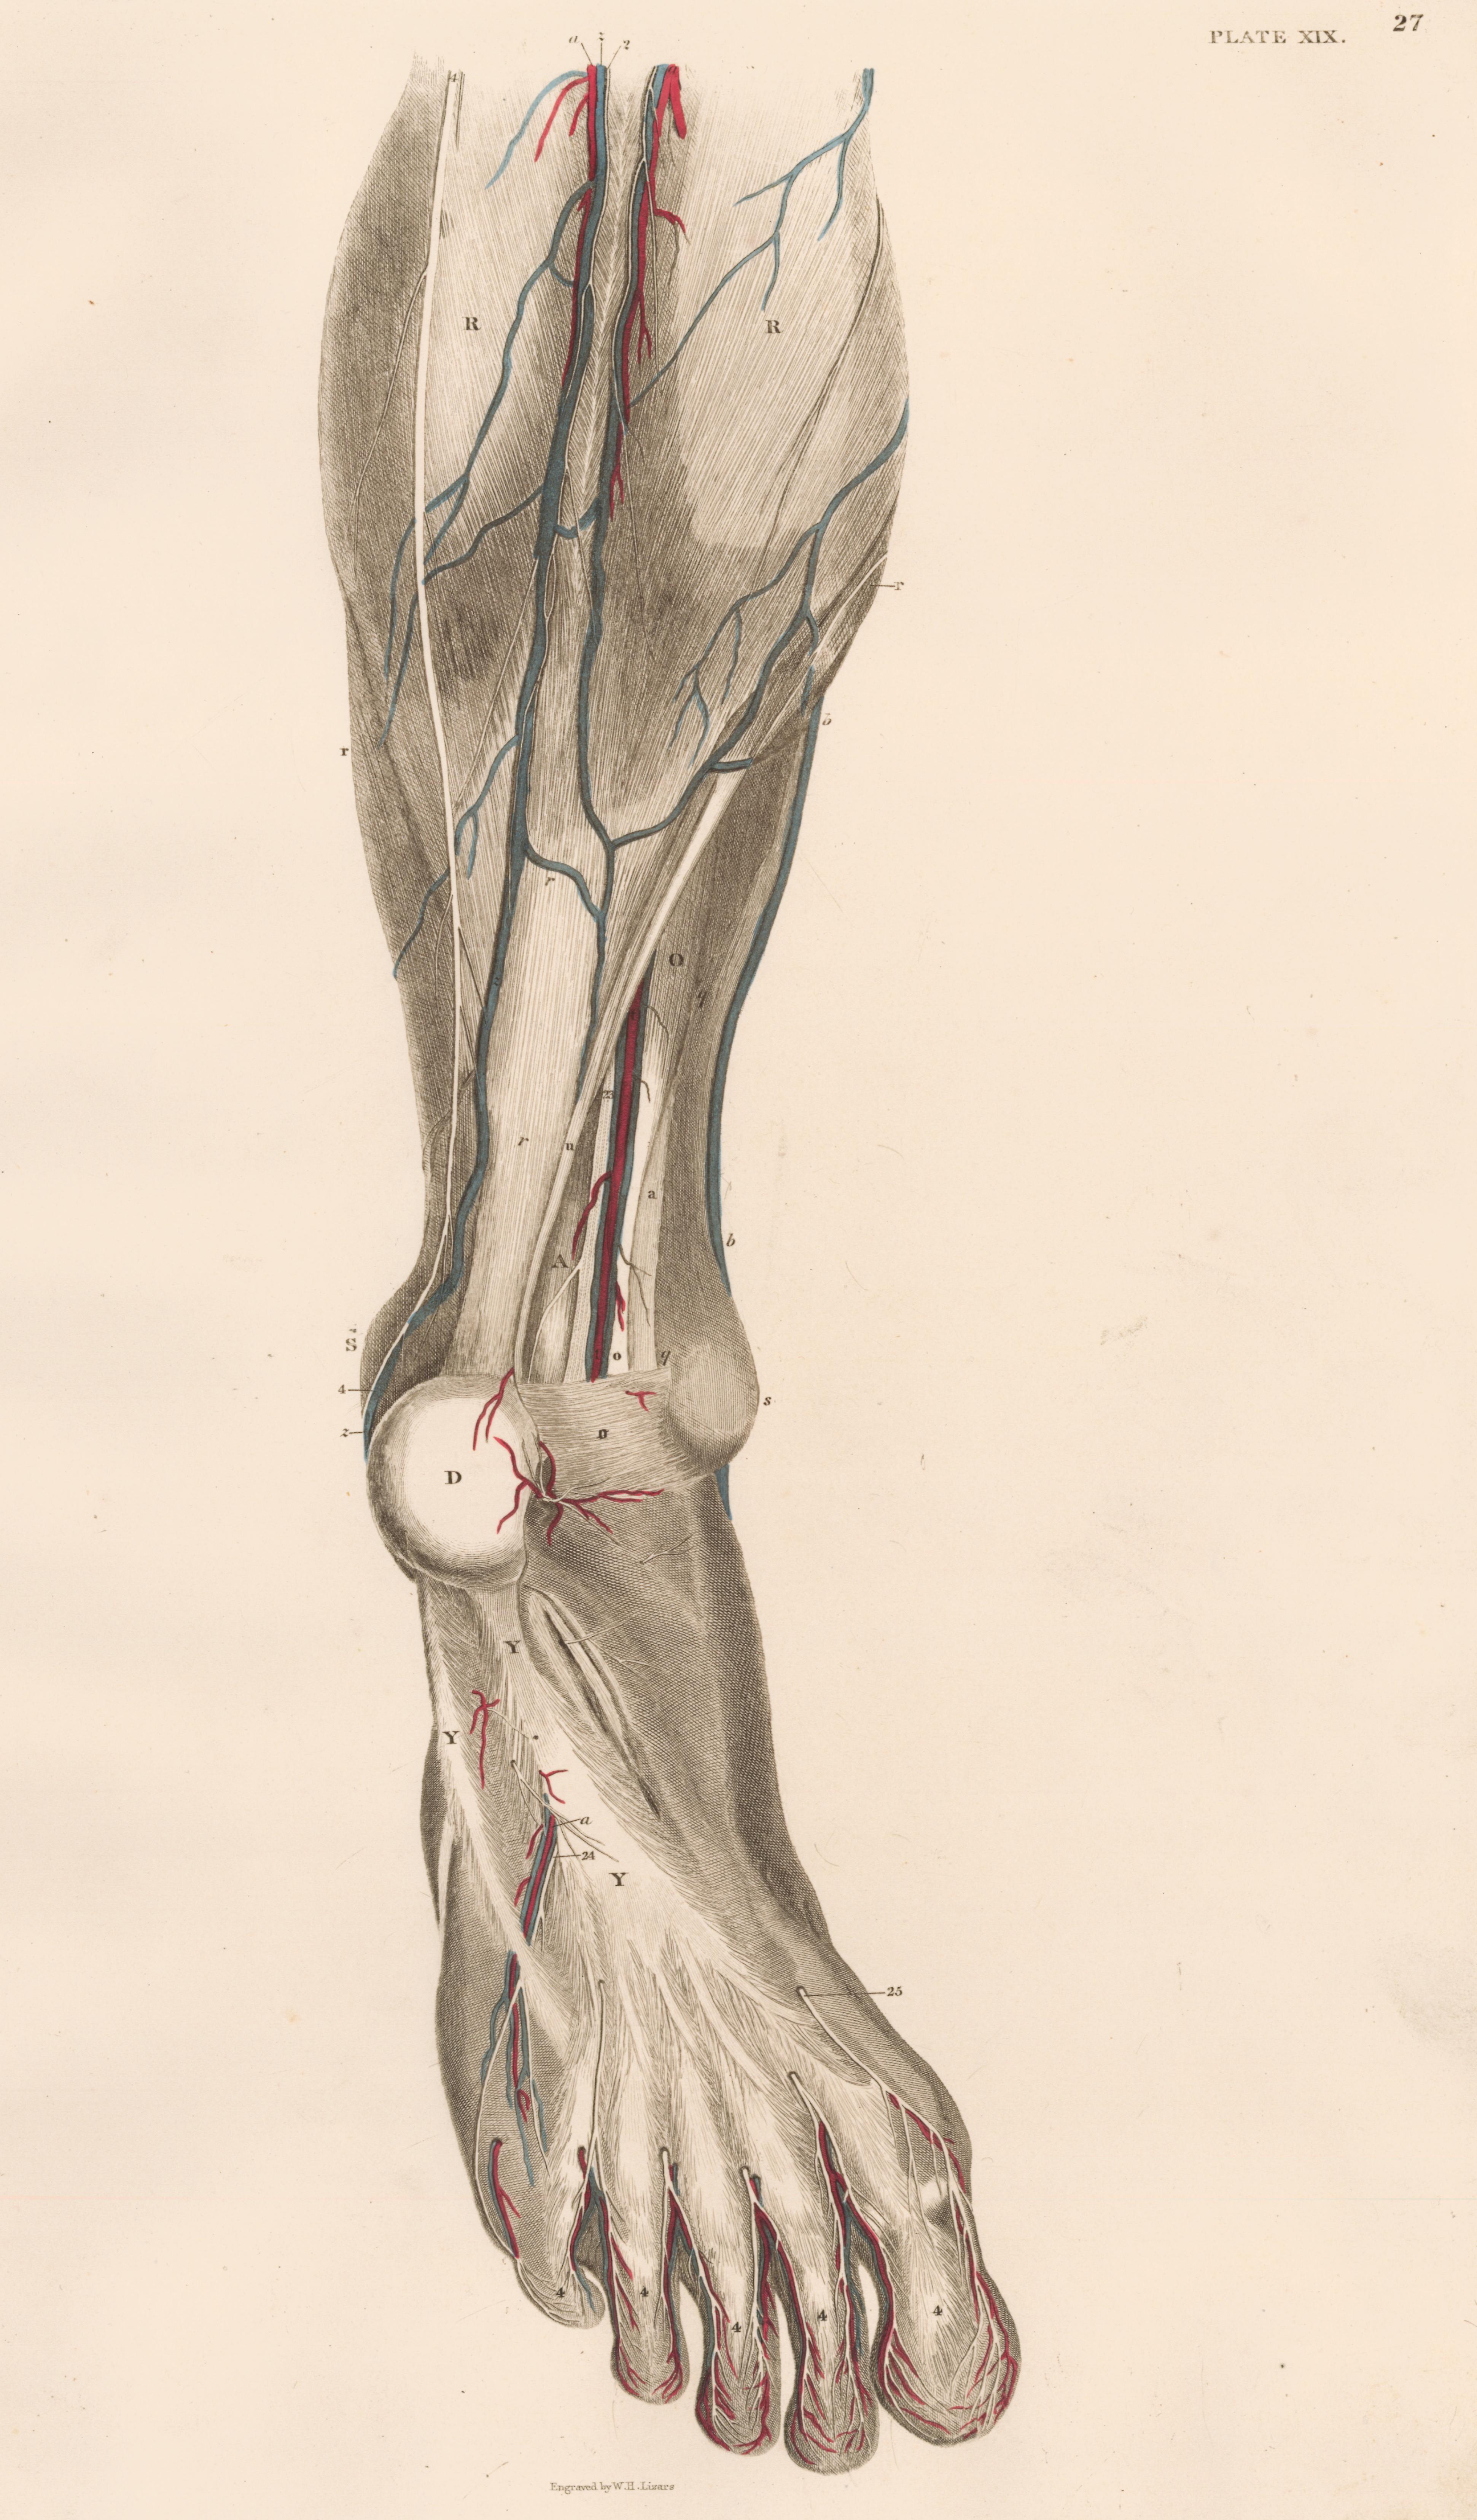 John Lizars Figurative Print - Anatomical Engraving of a Human Lower Leg